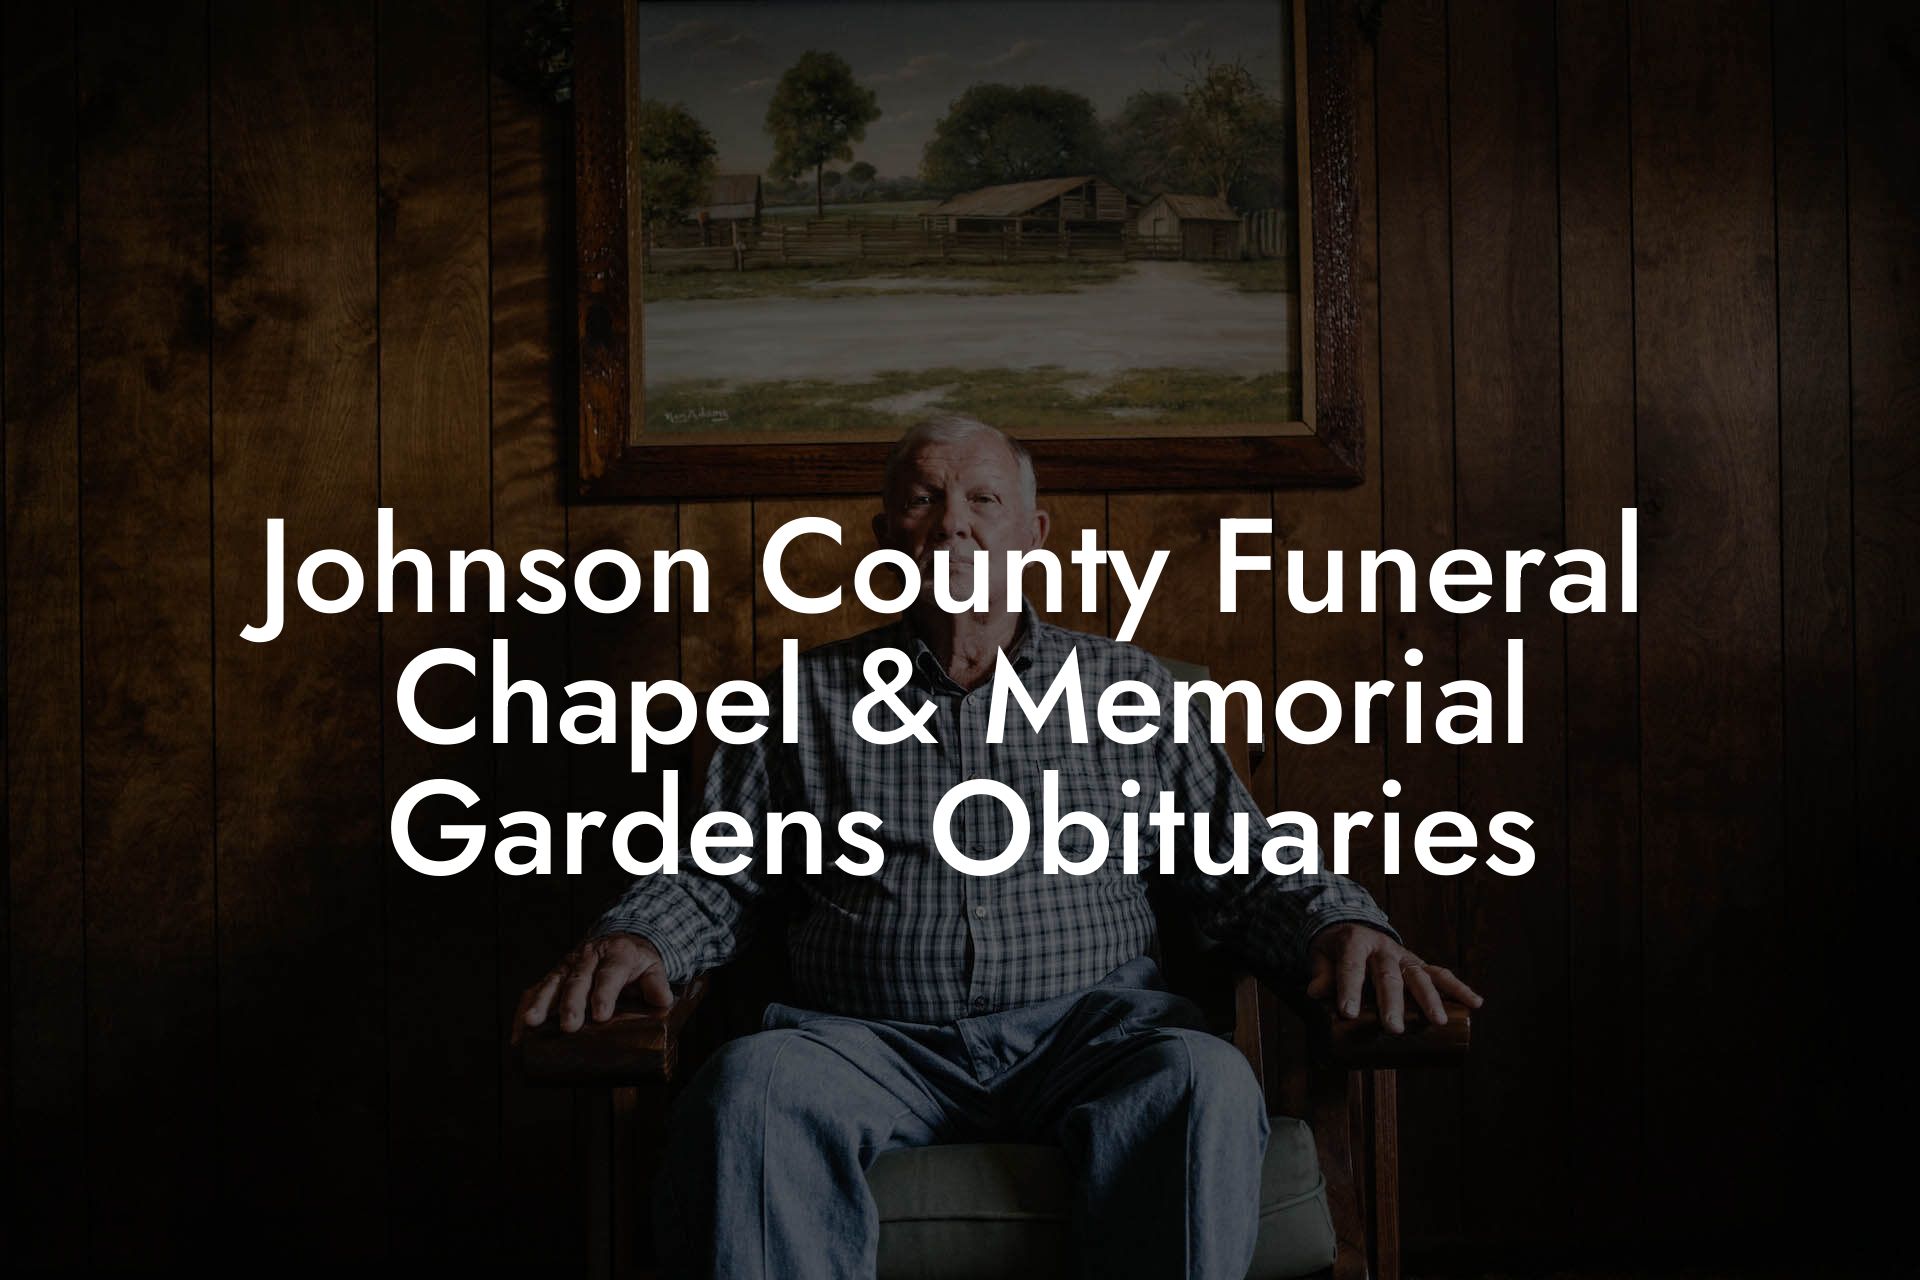 Johnson County Funeral Chapel & Memorial Gardens Obituaries